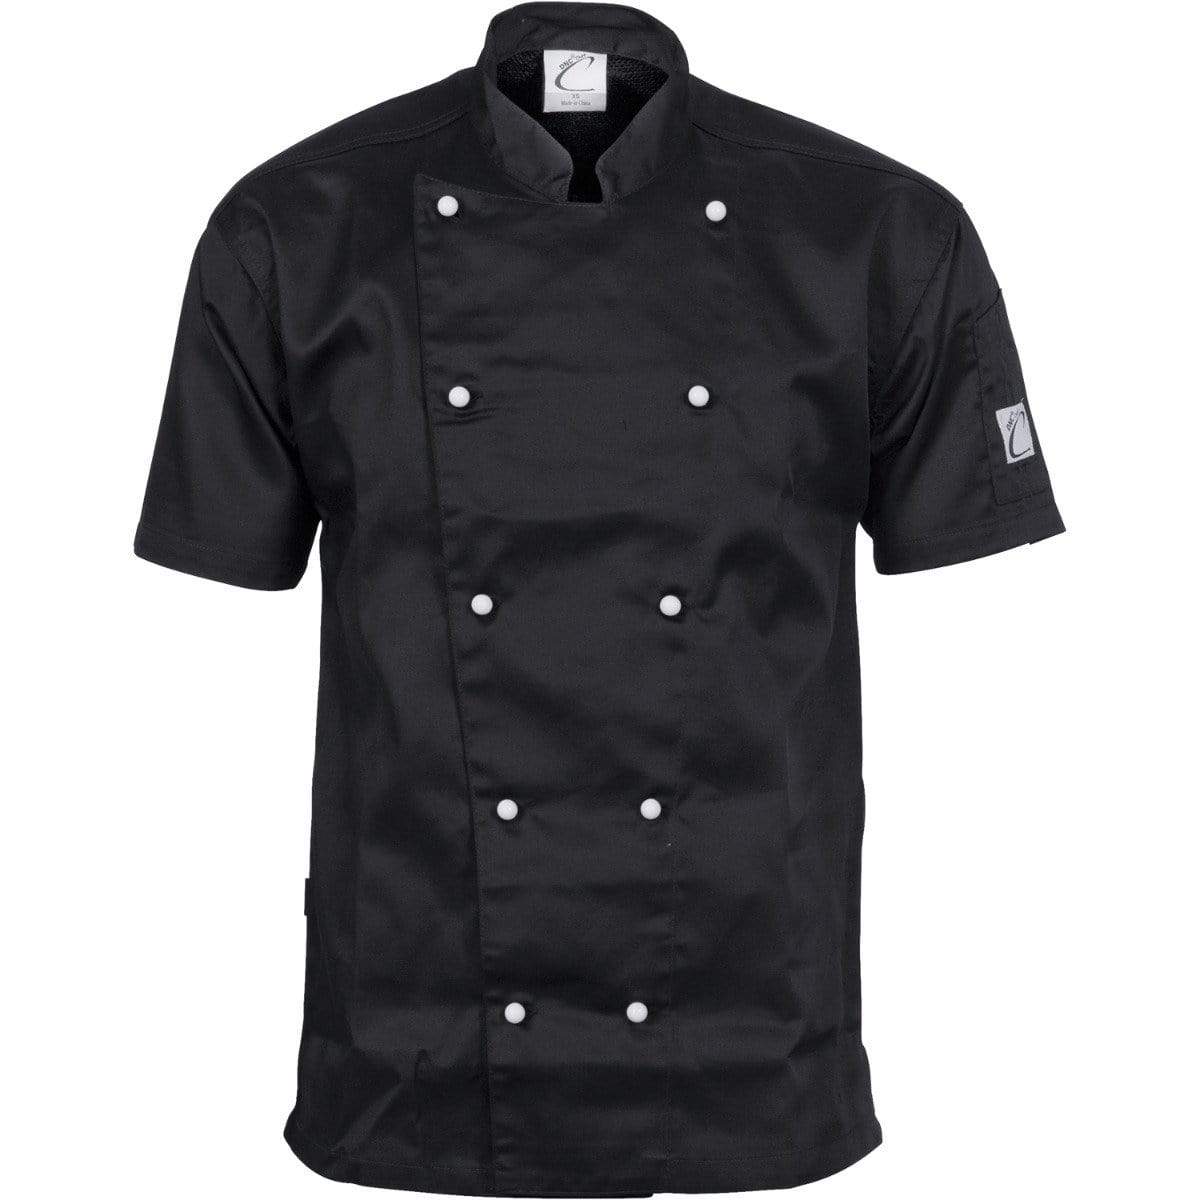 Dnc Workwear Traditional Short Sleeve Chef Jacket -1101 Hospitality & Chefwear DNC Workwear Black XXS 